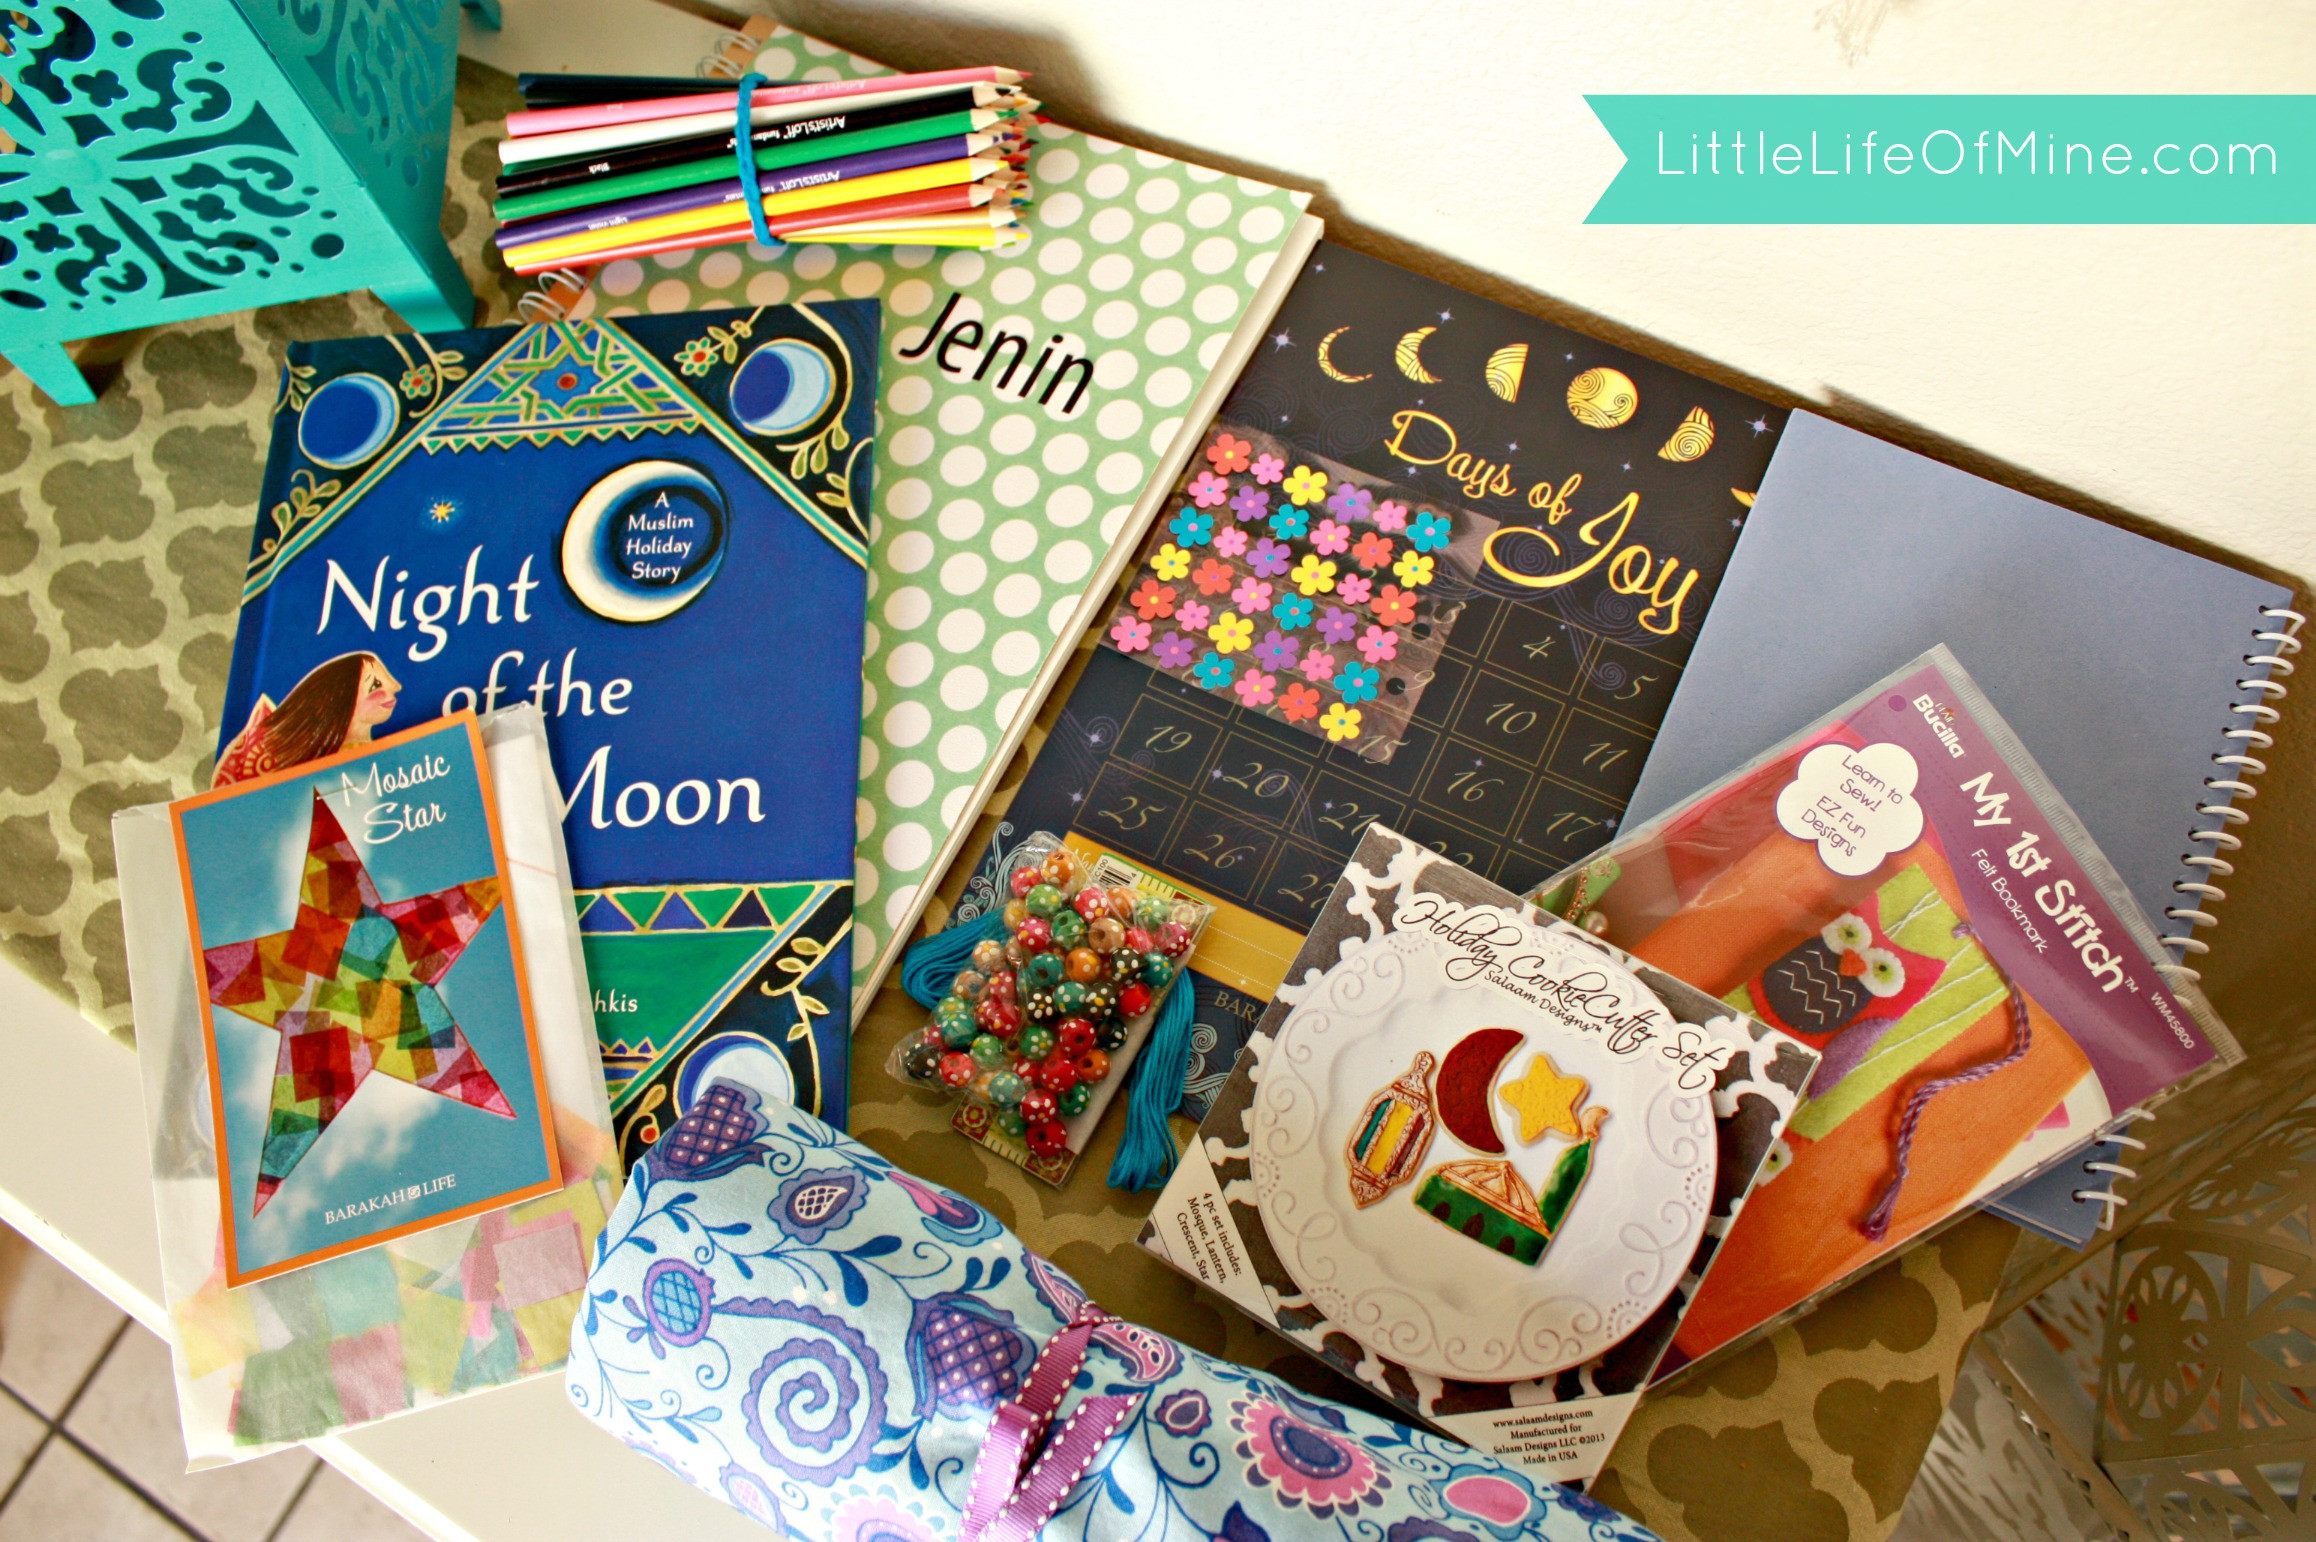 Best ideas about Ramadan Gift Ideas
. Save or Pin Annual Ramadan Gift Basket littlelifeofmine Now.